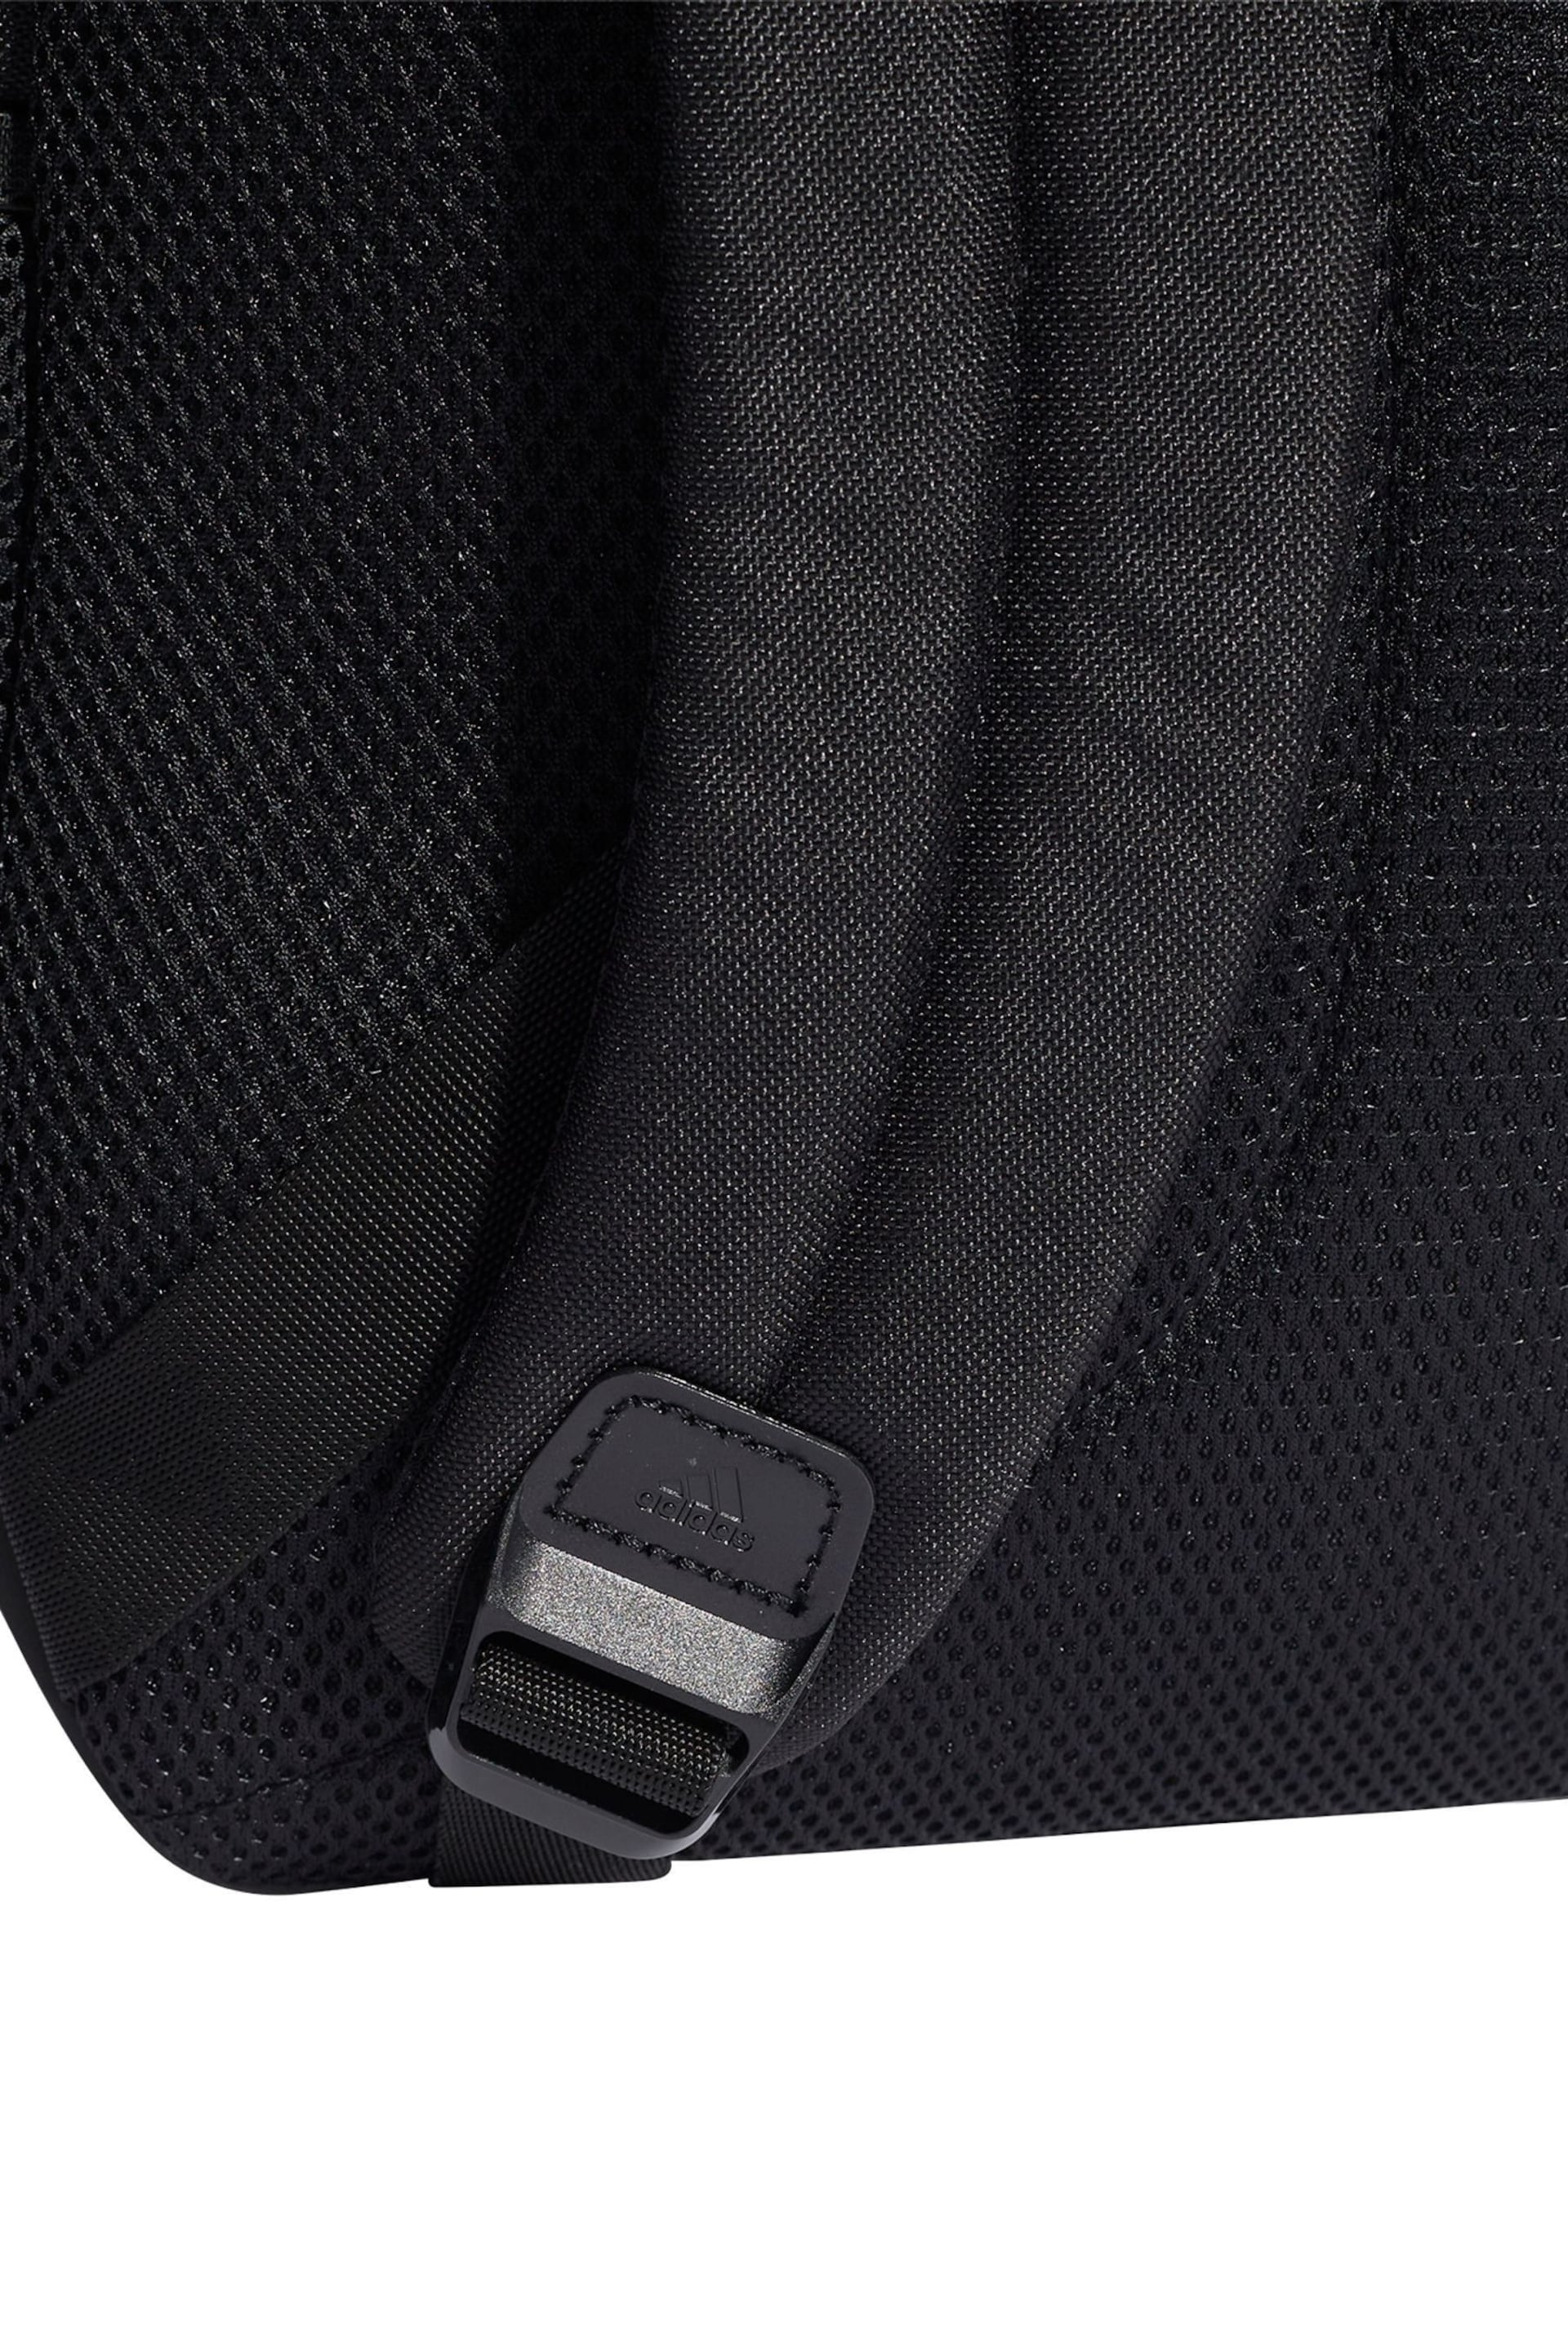 adidas Black/White Power Backpack - Image 5 of 6